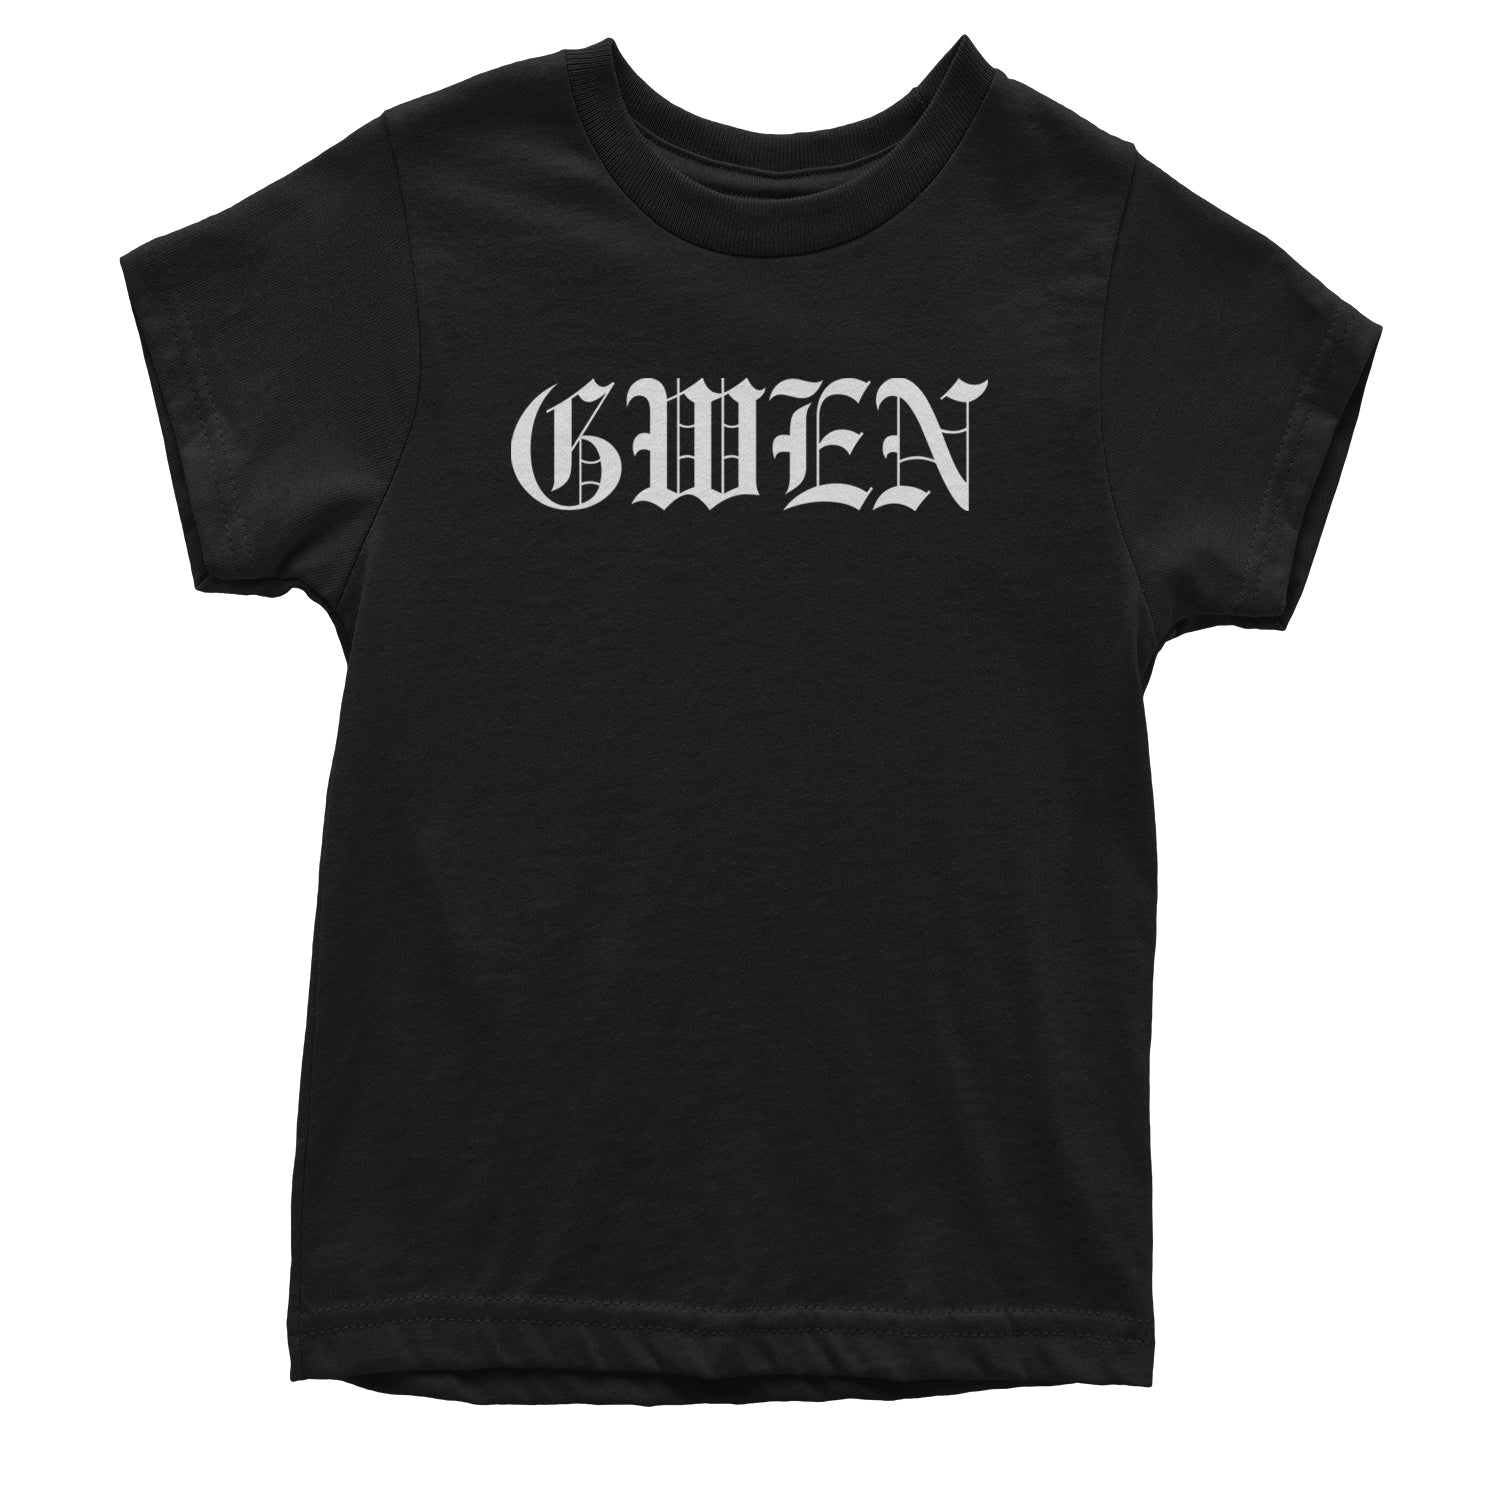 Gwen 90's Y2K Throwback Grunge Ska Youth T-shirt